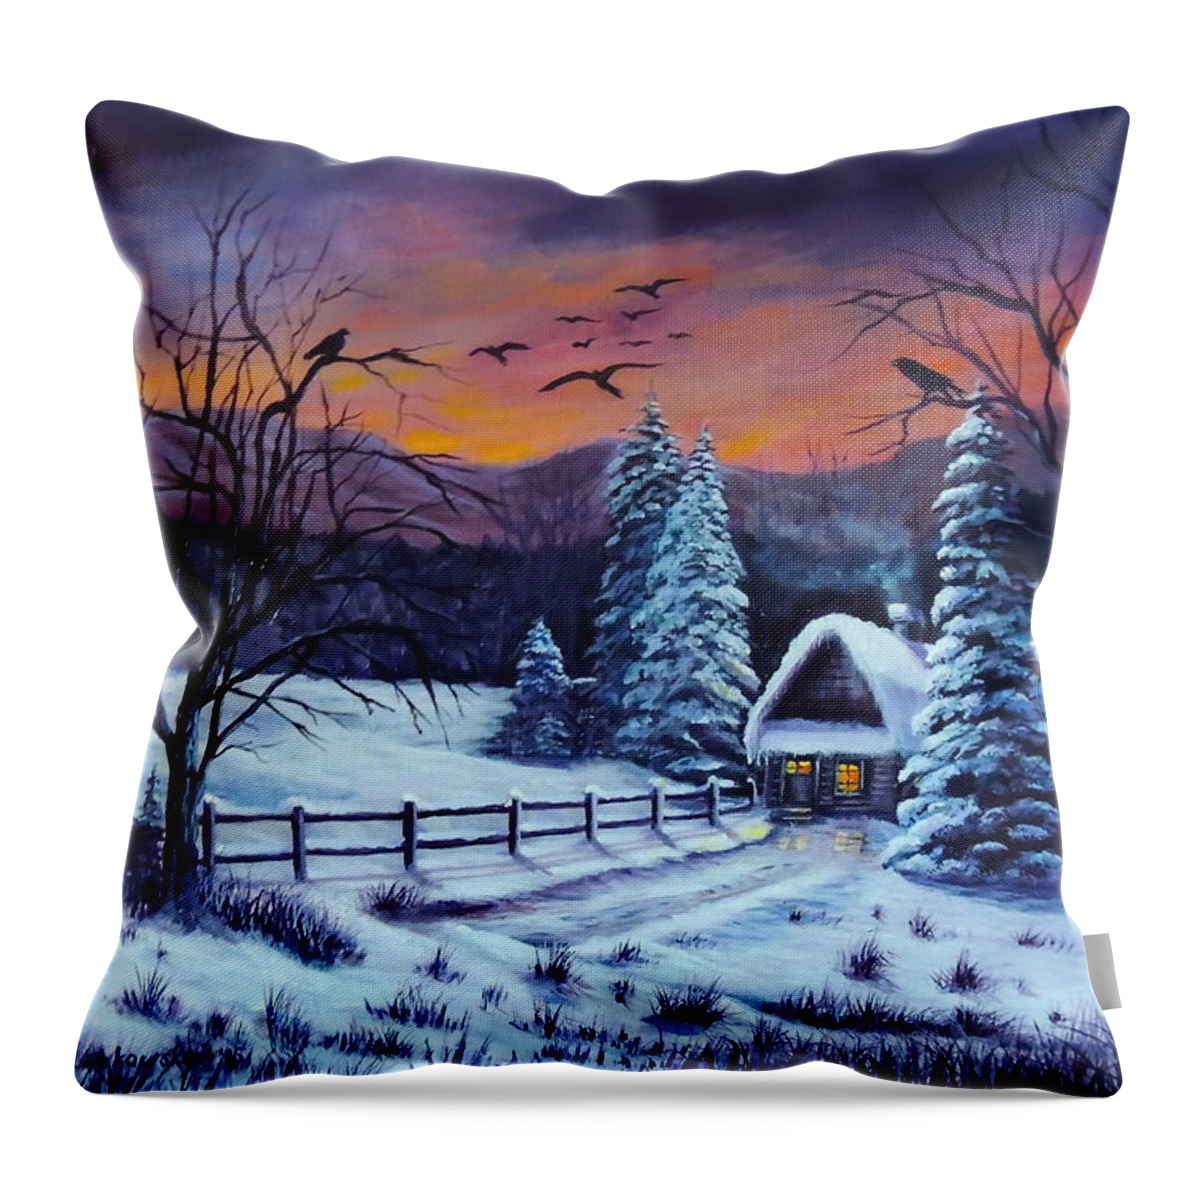 Winter Throw Pillow featuring the painting Winter Evening 2 by Bozena Zajaczkowska